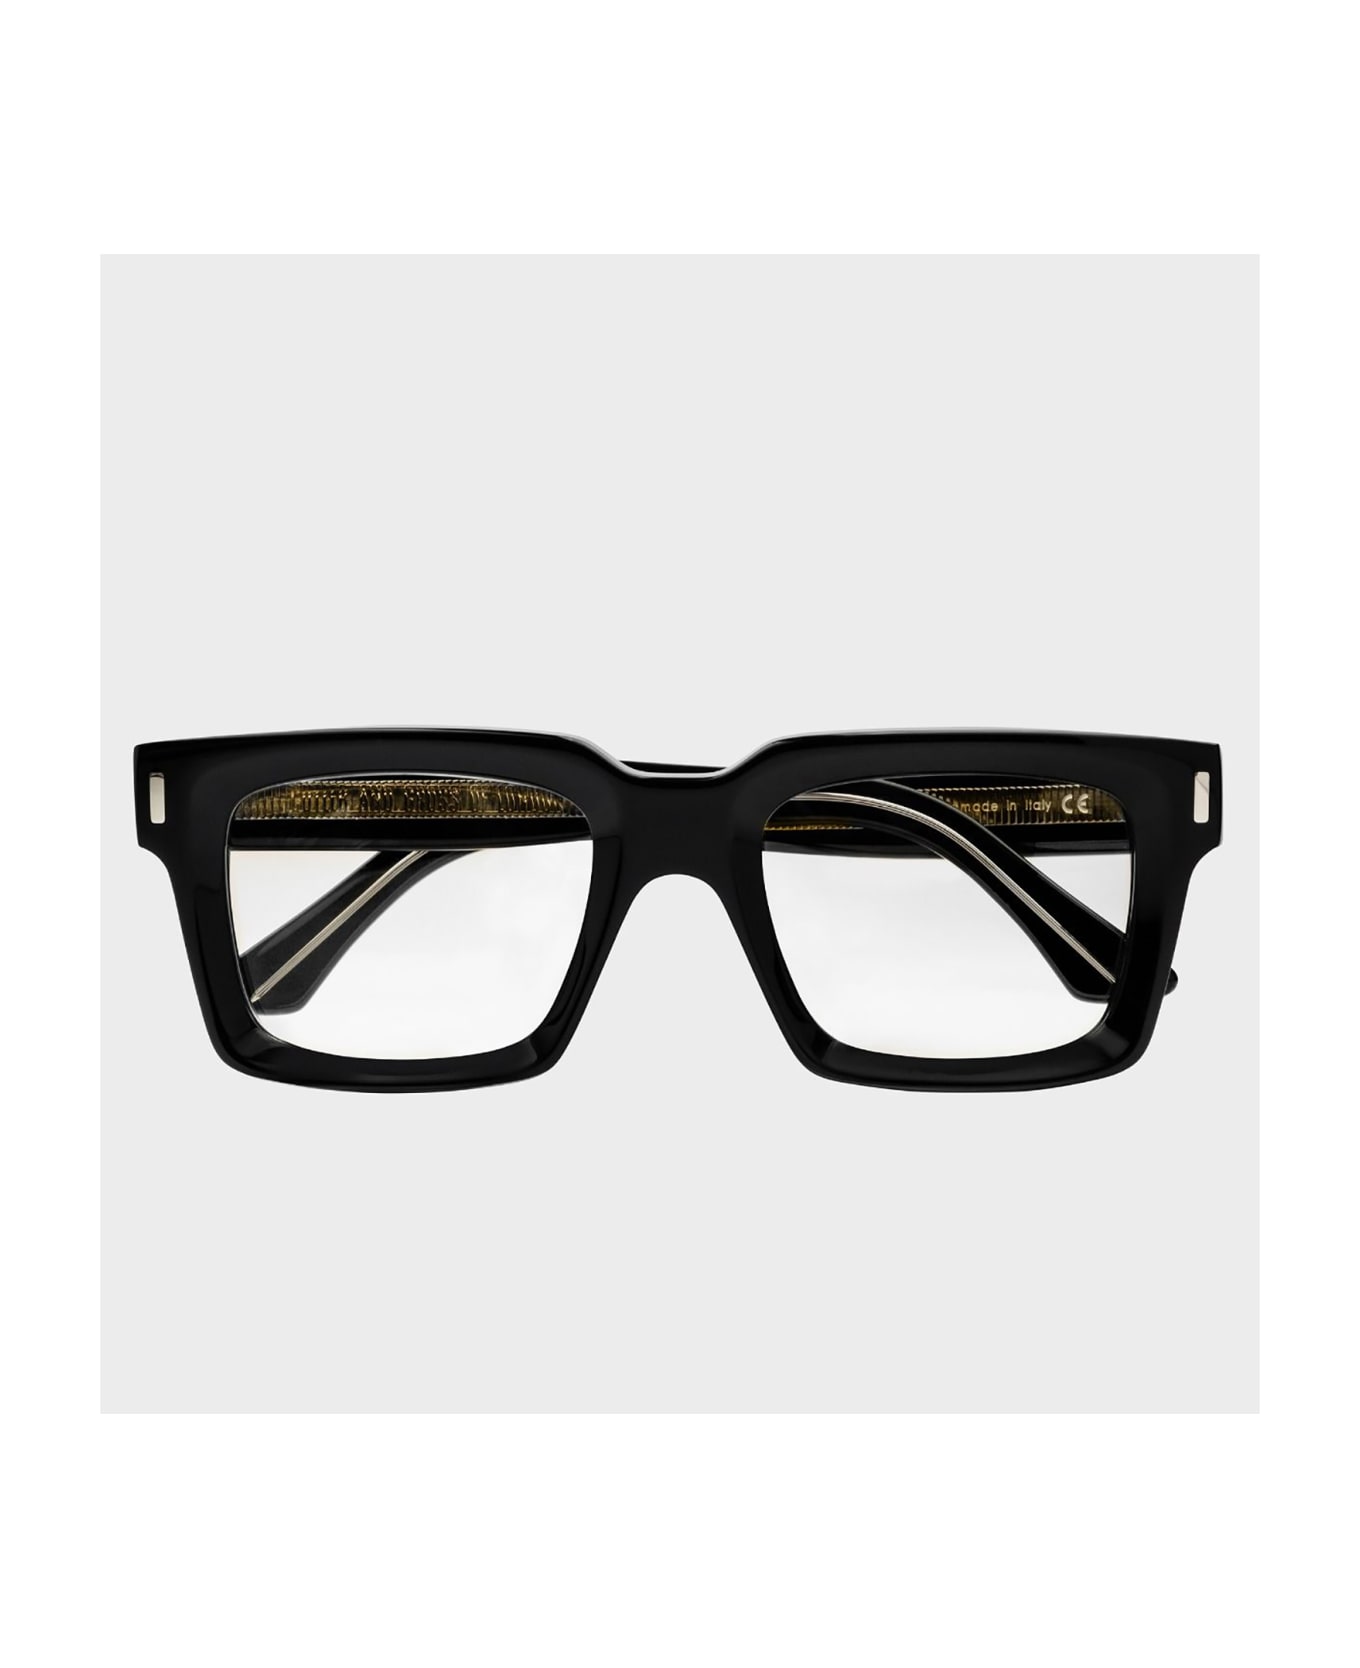 Cutler and Gross 1386 Eyewear - Black